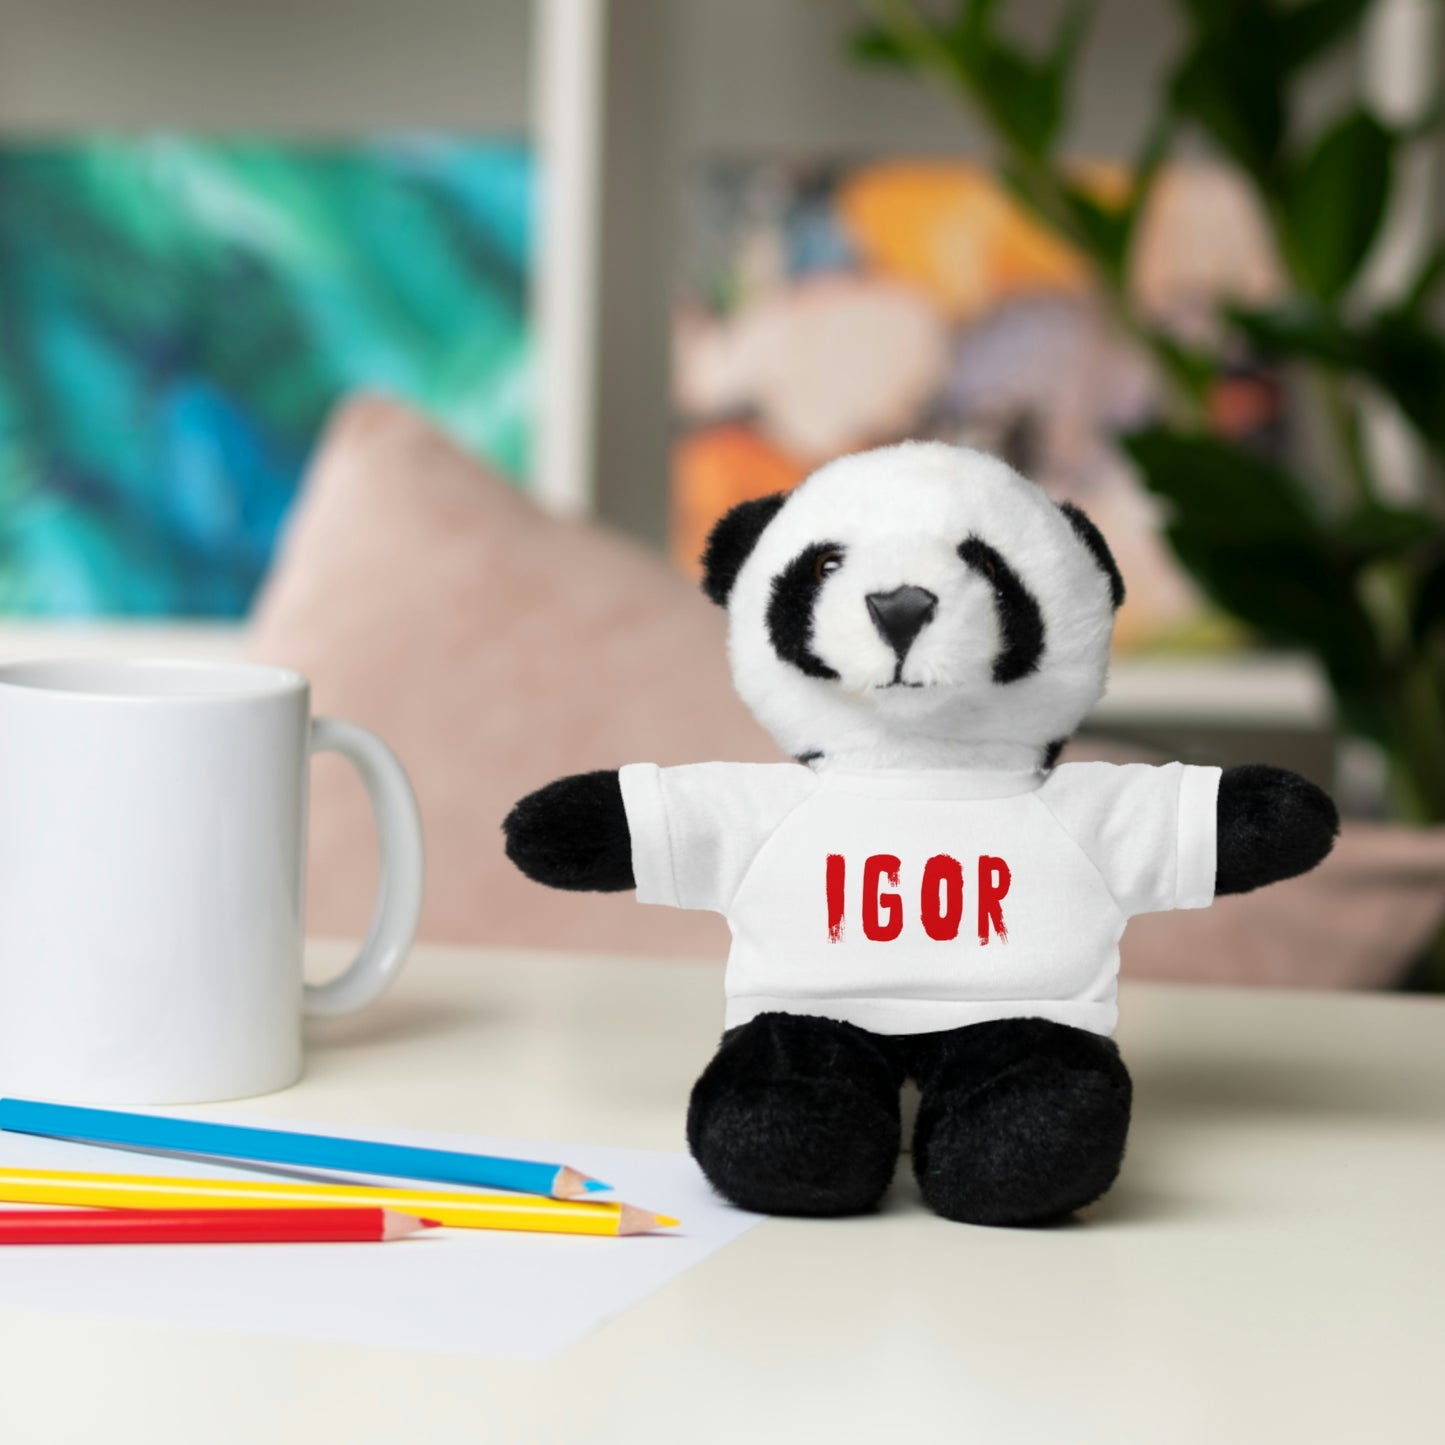 Igor Panda toy